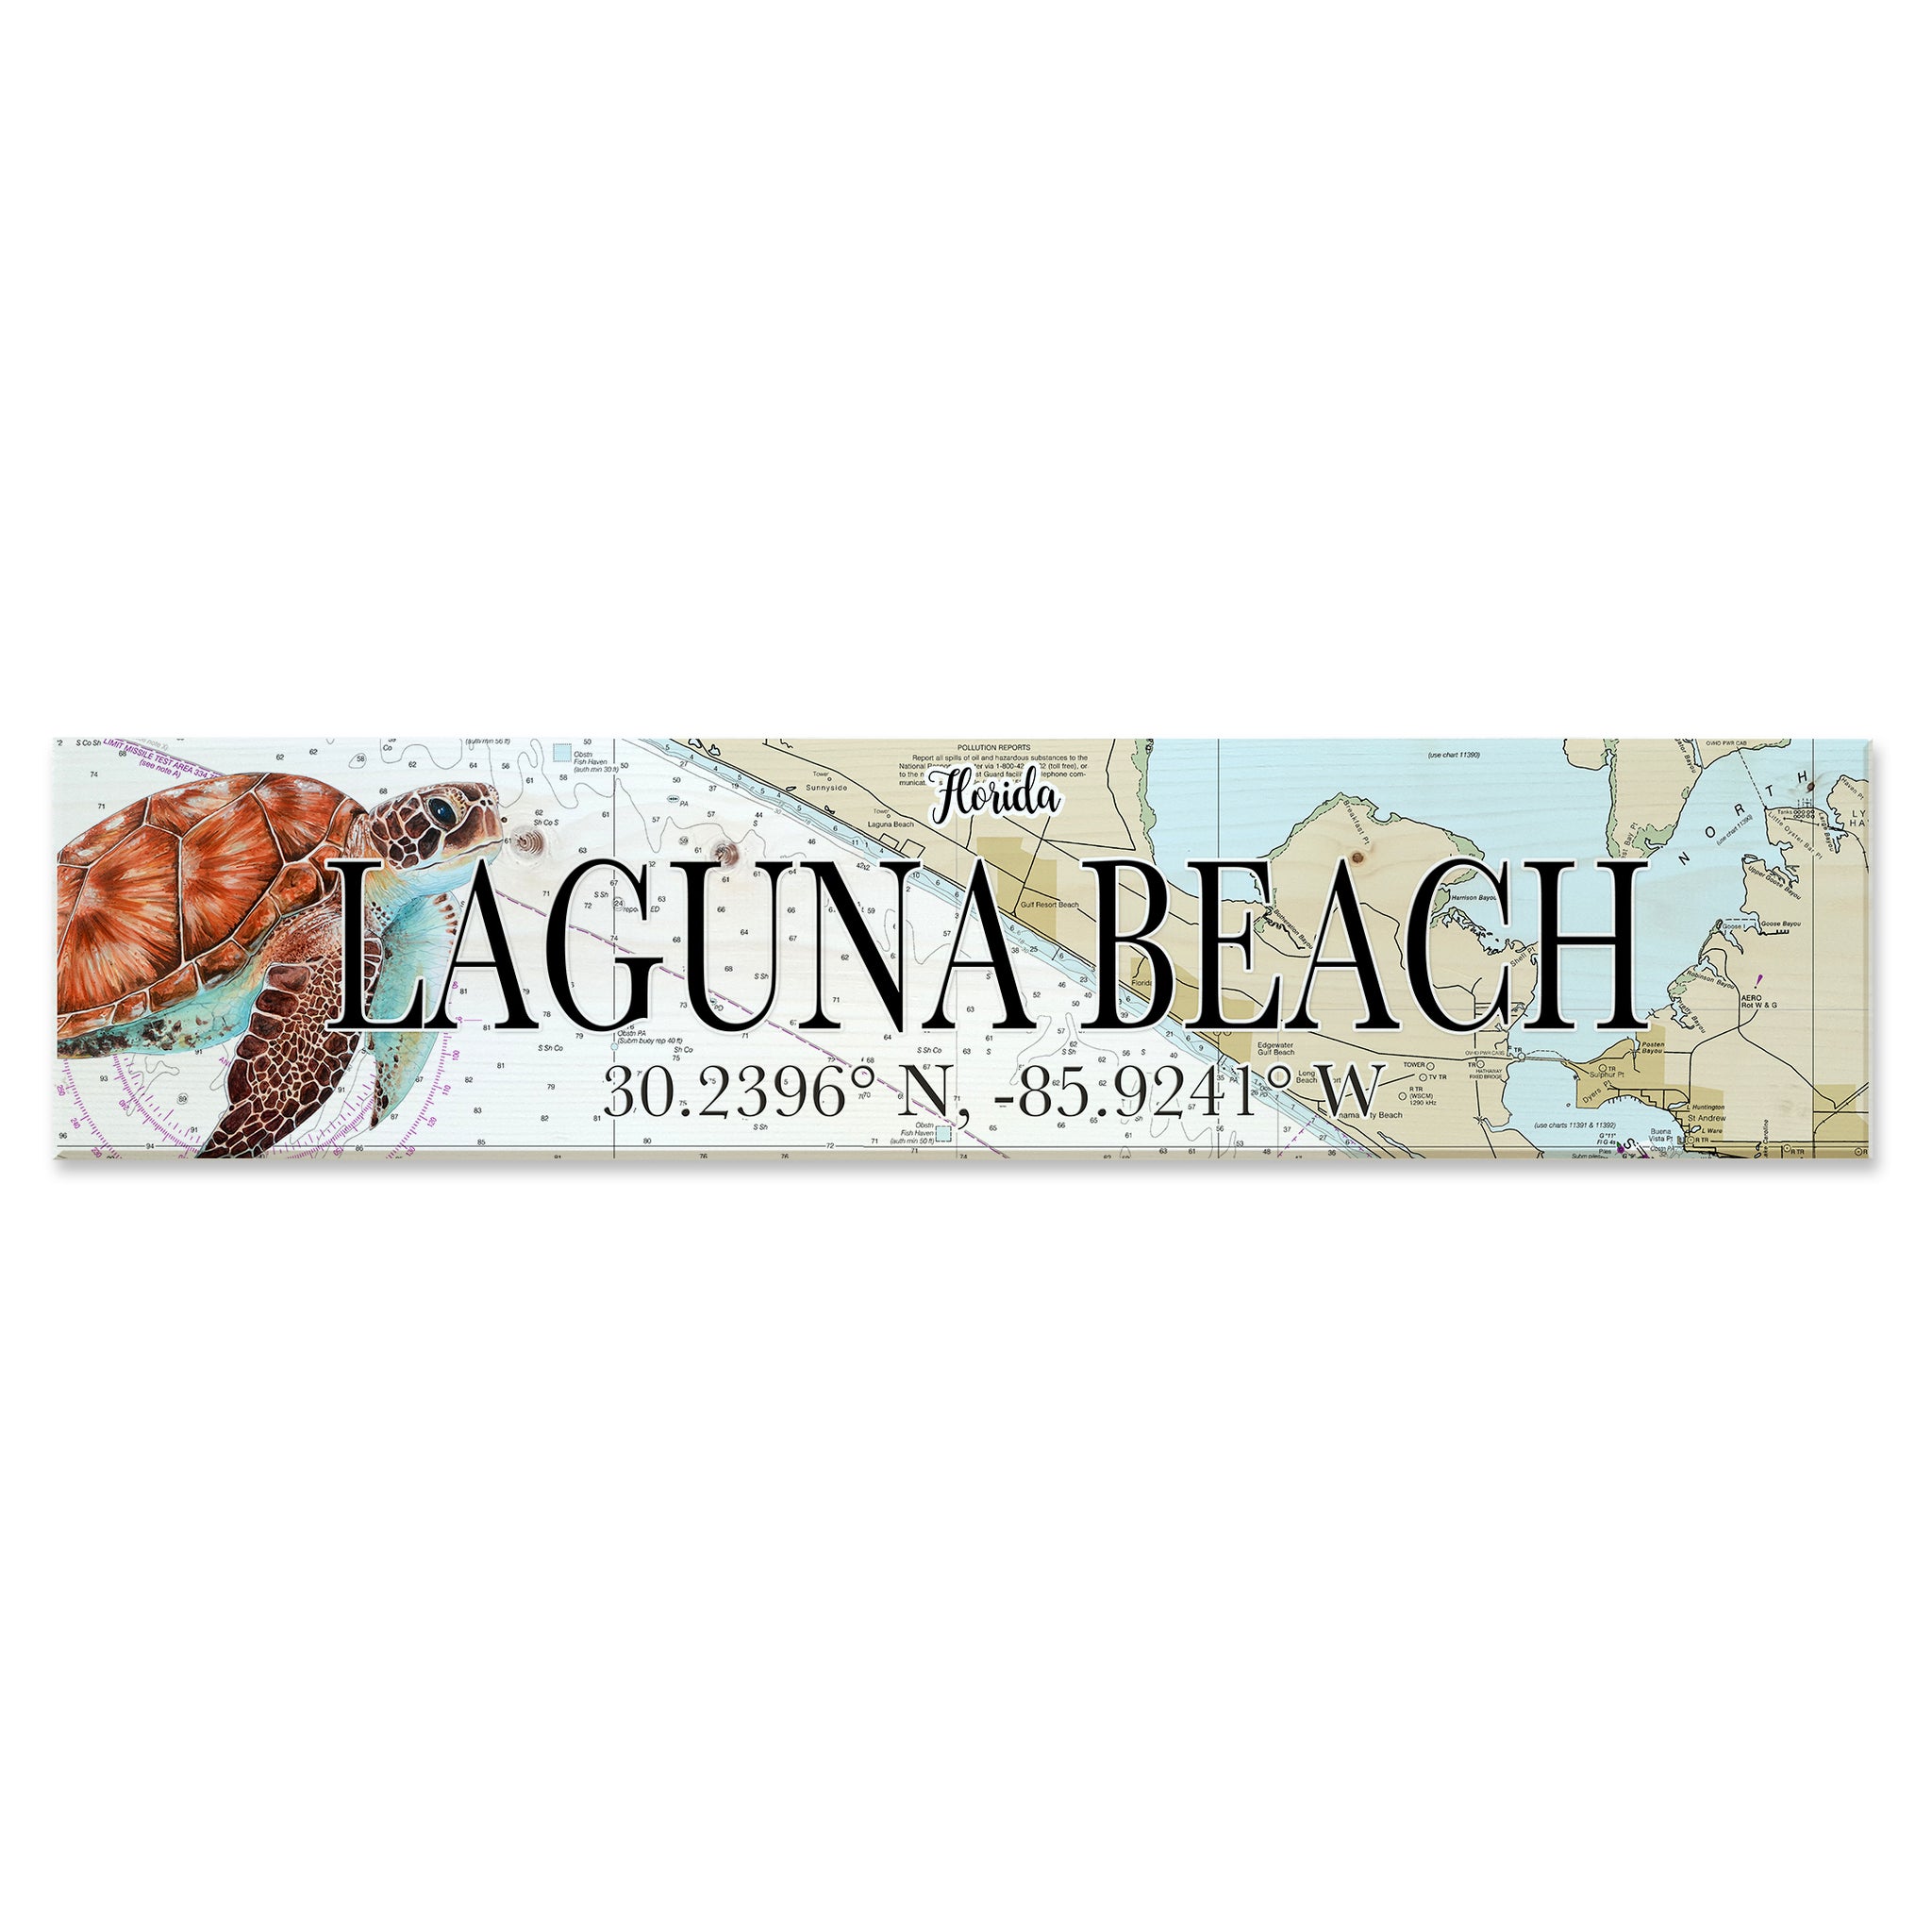 Laguna Beach, CA  Sea Turtle Coordinate Sign